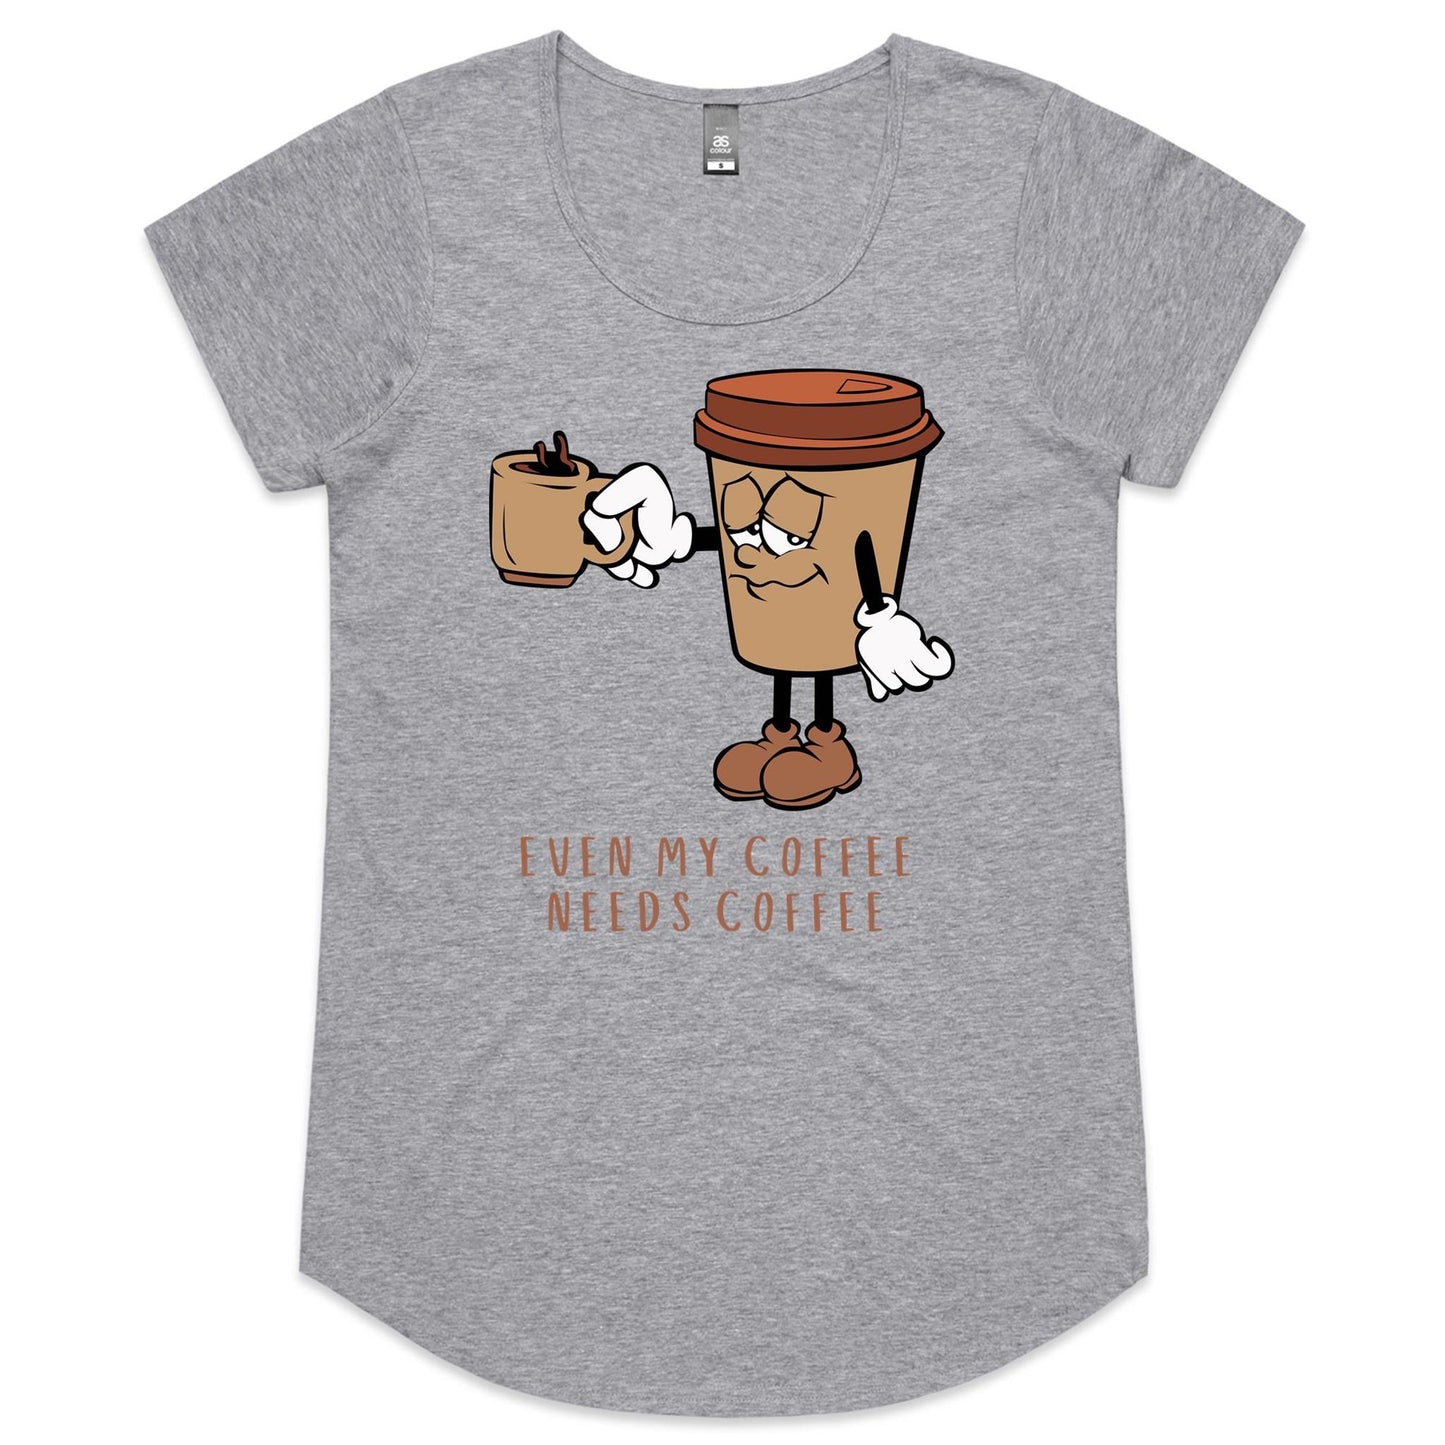 Even My Coffee Needs Coffee - Womens Scoop Neck T-Shirt Grey Marle Womens Scoop Neck T-shirt Coffee